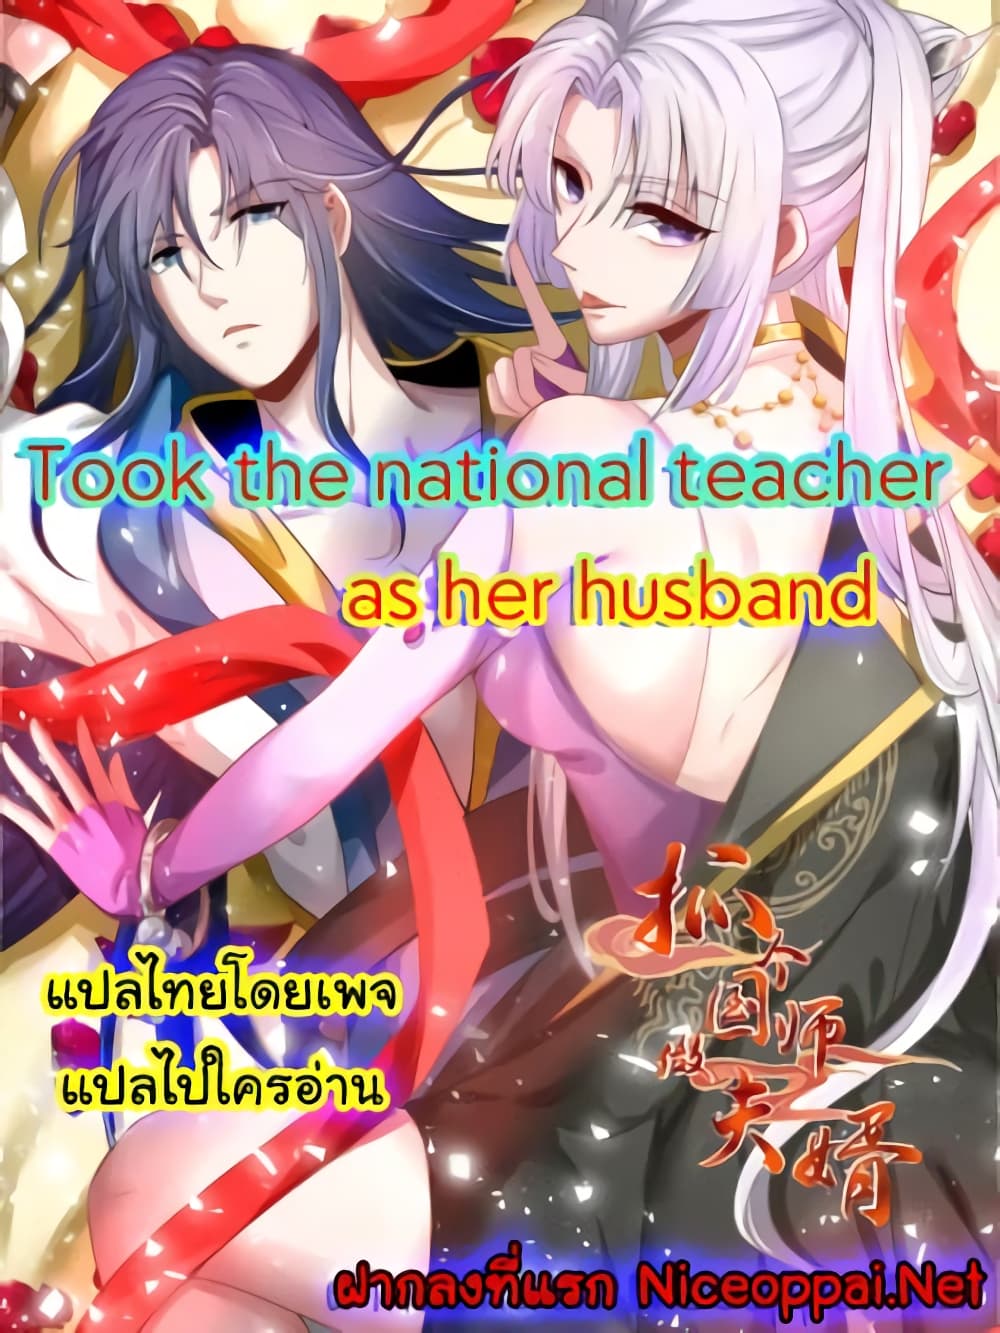 Took the National Teacher as Her Husband7 (1)